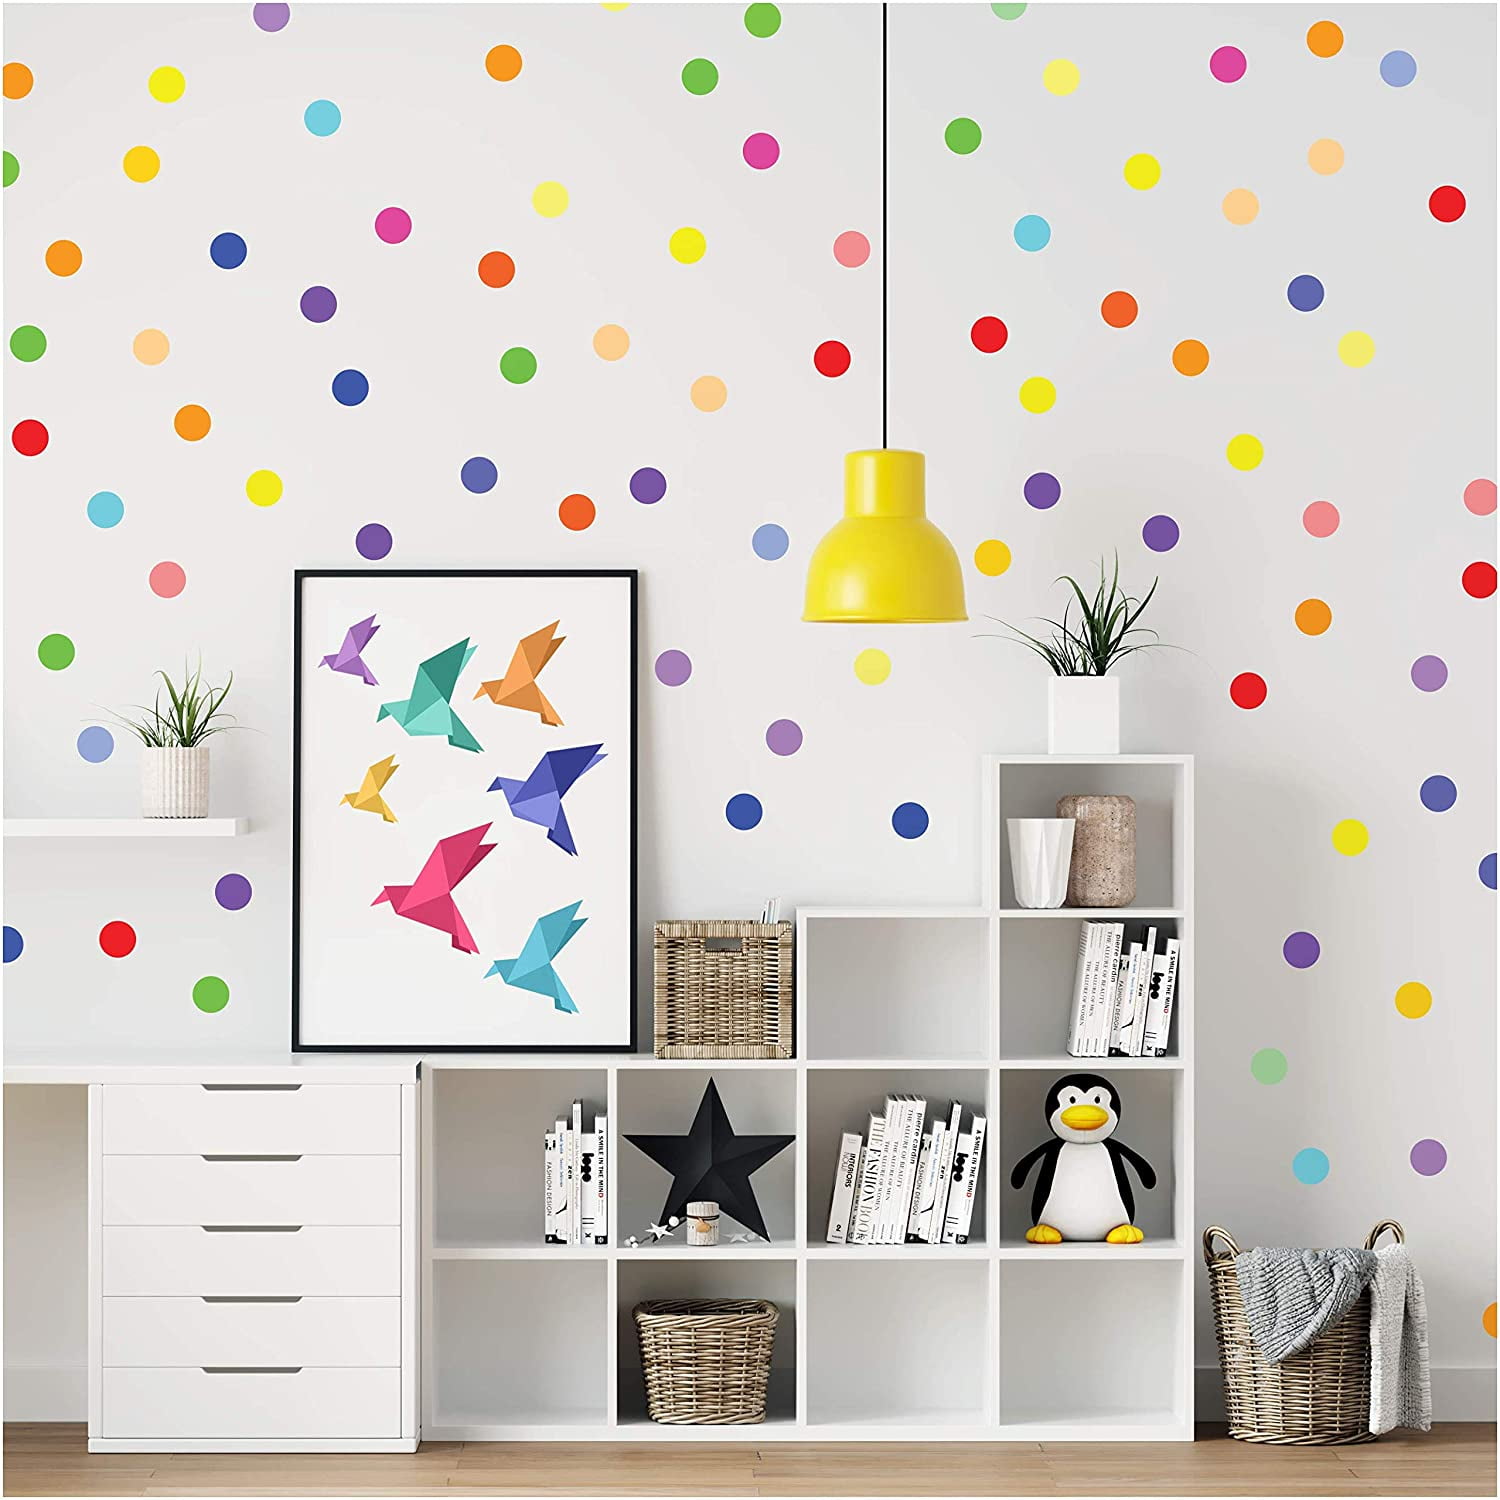 KSCD Large Round Polka Dot Confetti Wall Decal Baby Nursery Child